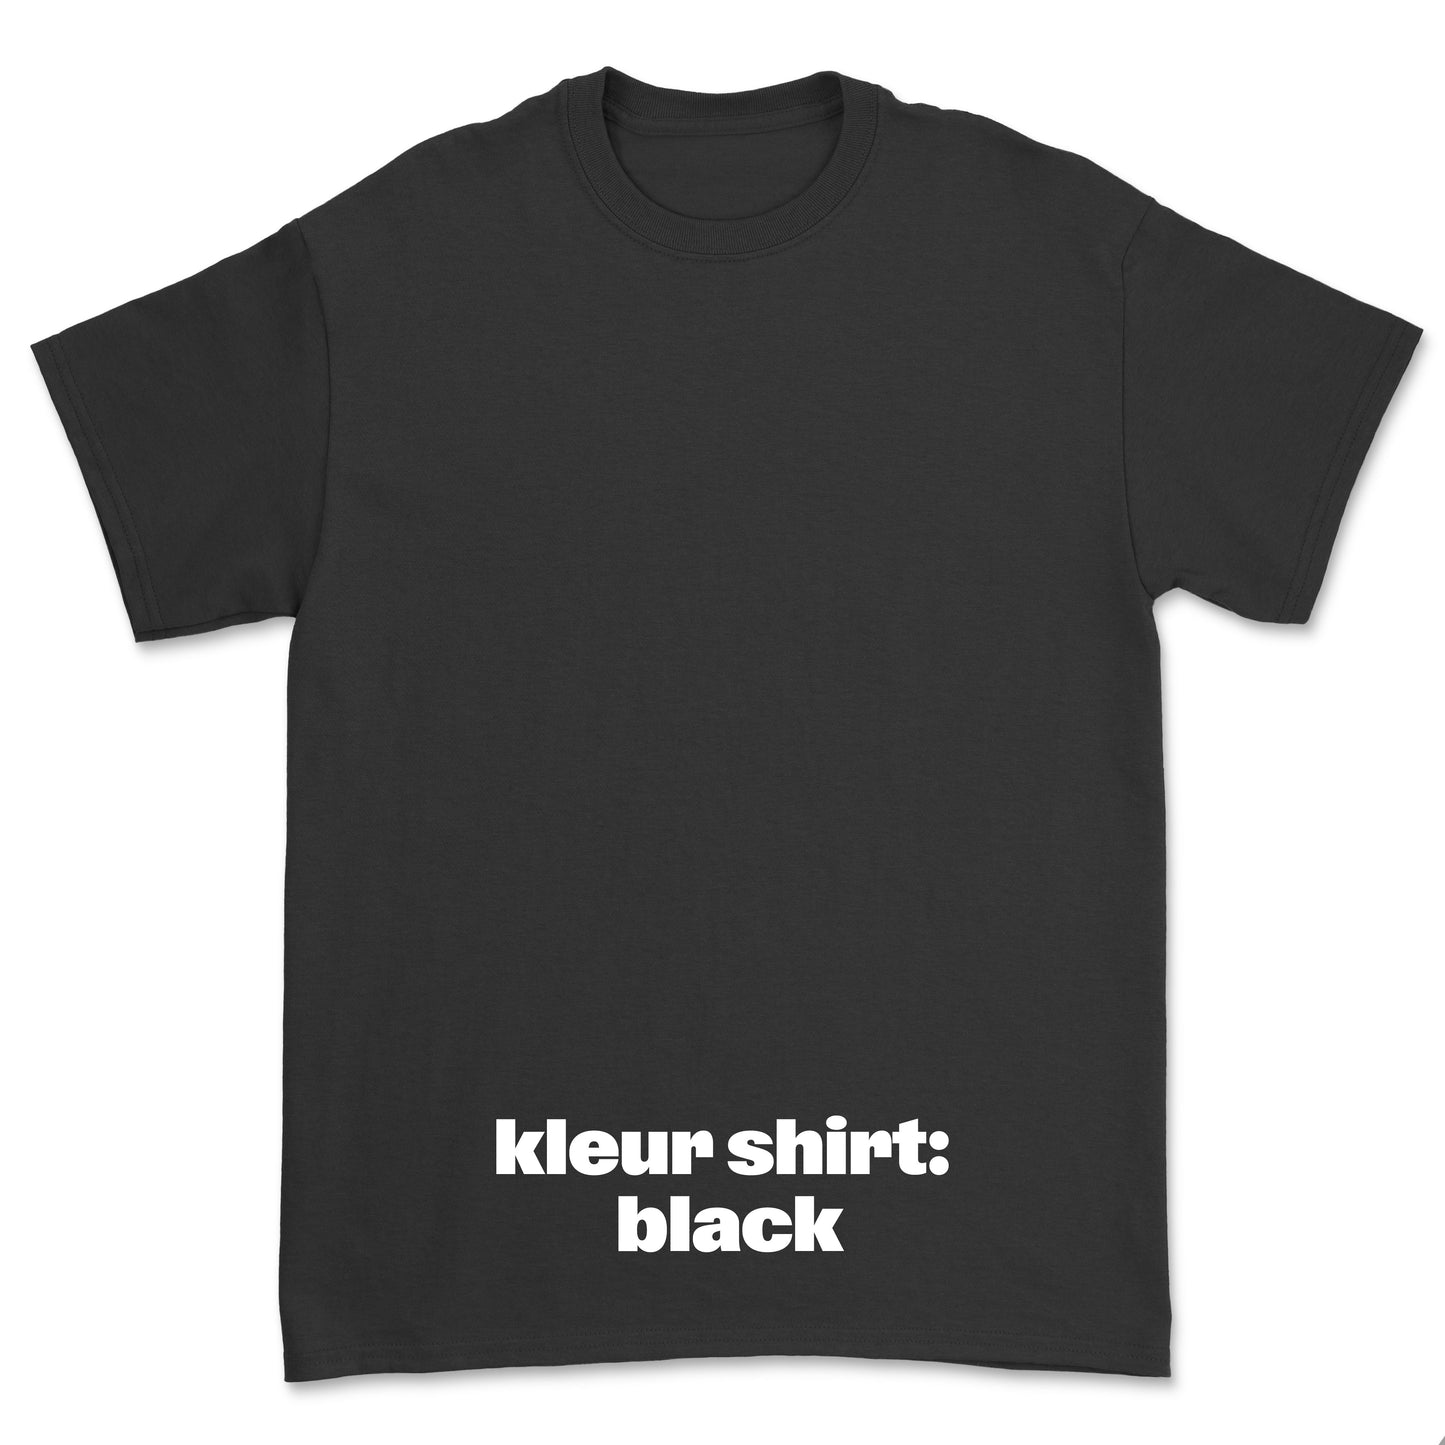 T-shirt 'Left of the Dial' • JOH klein wit logo borst